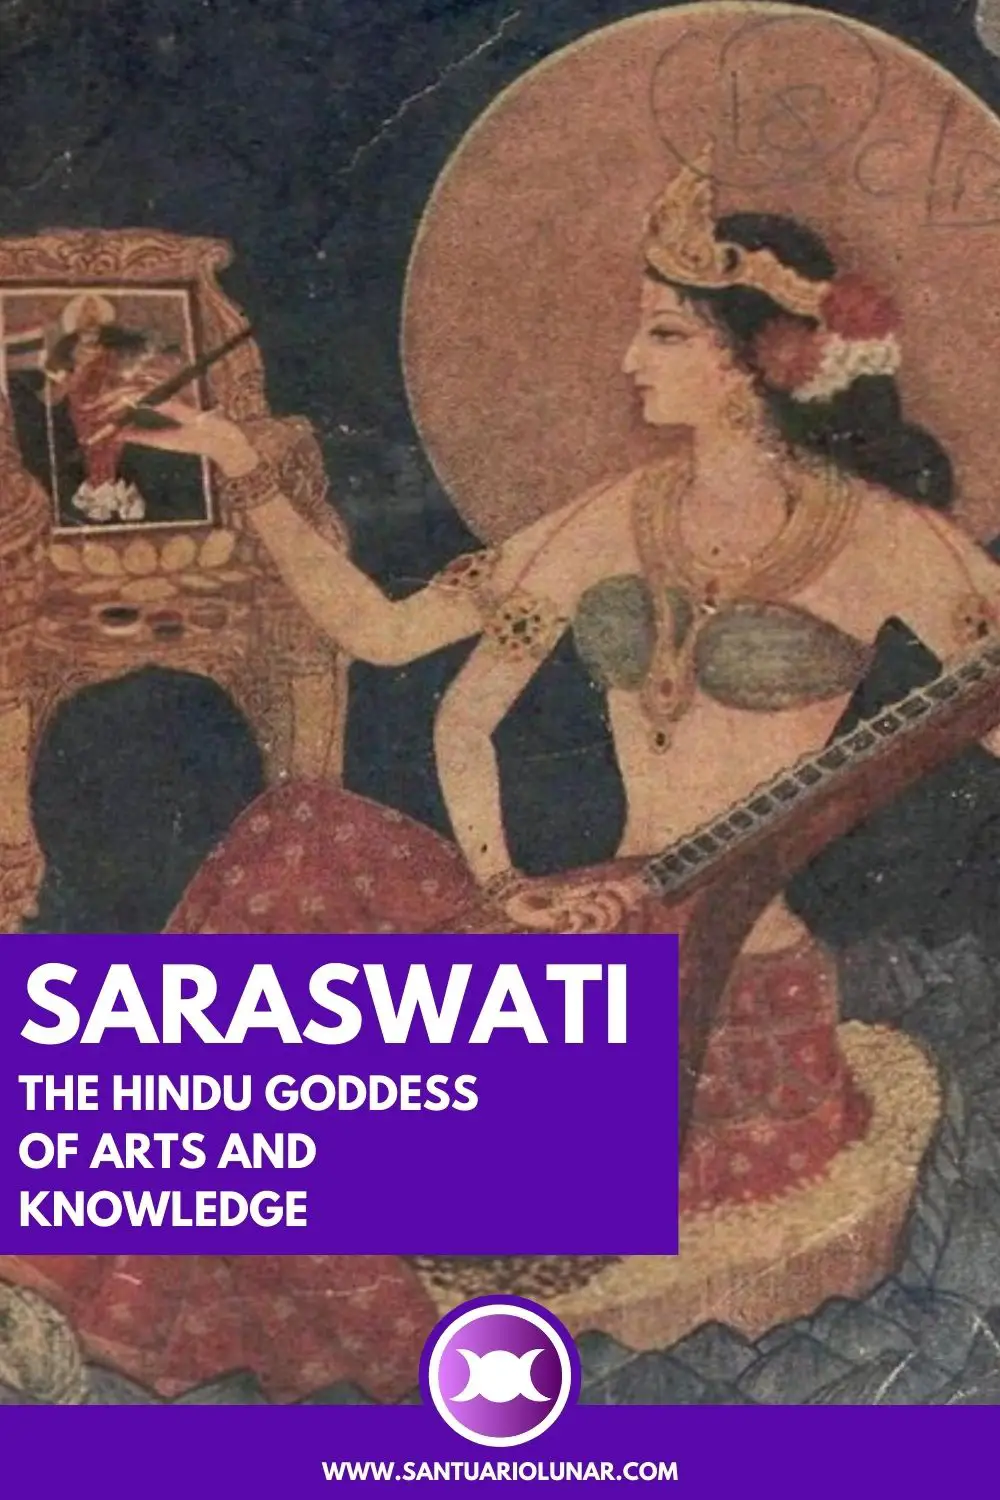 Saraswati painting an artwork for Pinterest